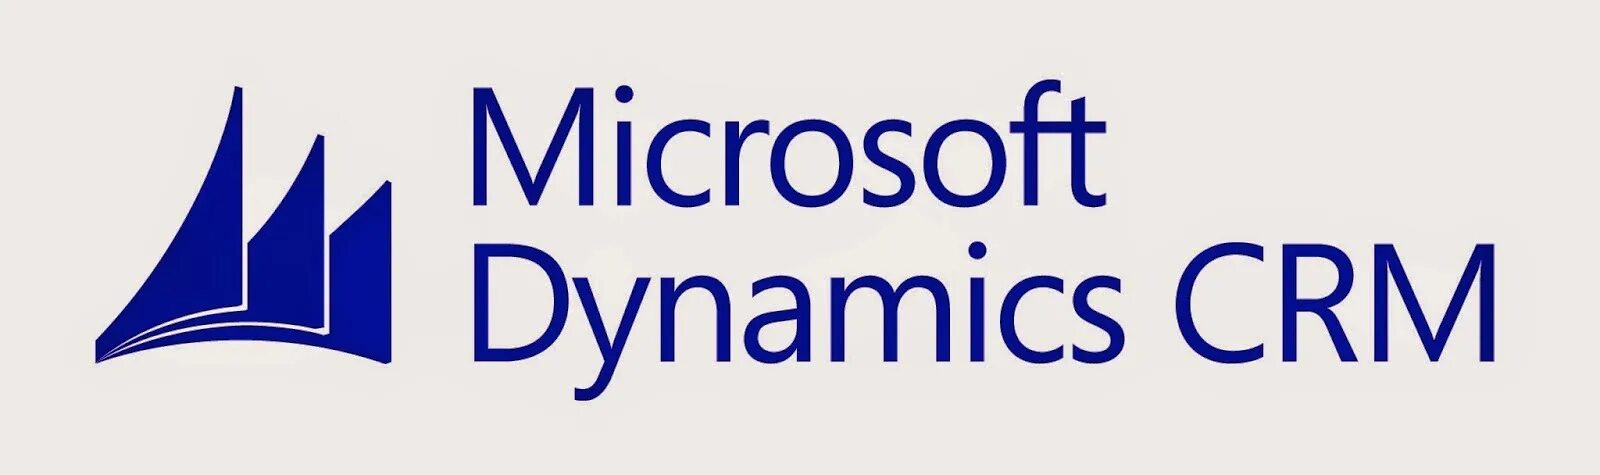 Microsoft Dynamics. Microsoft Dynamics CRM. Microsoft Dynamics logo. Microsoft Dynamics CRM 2016.